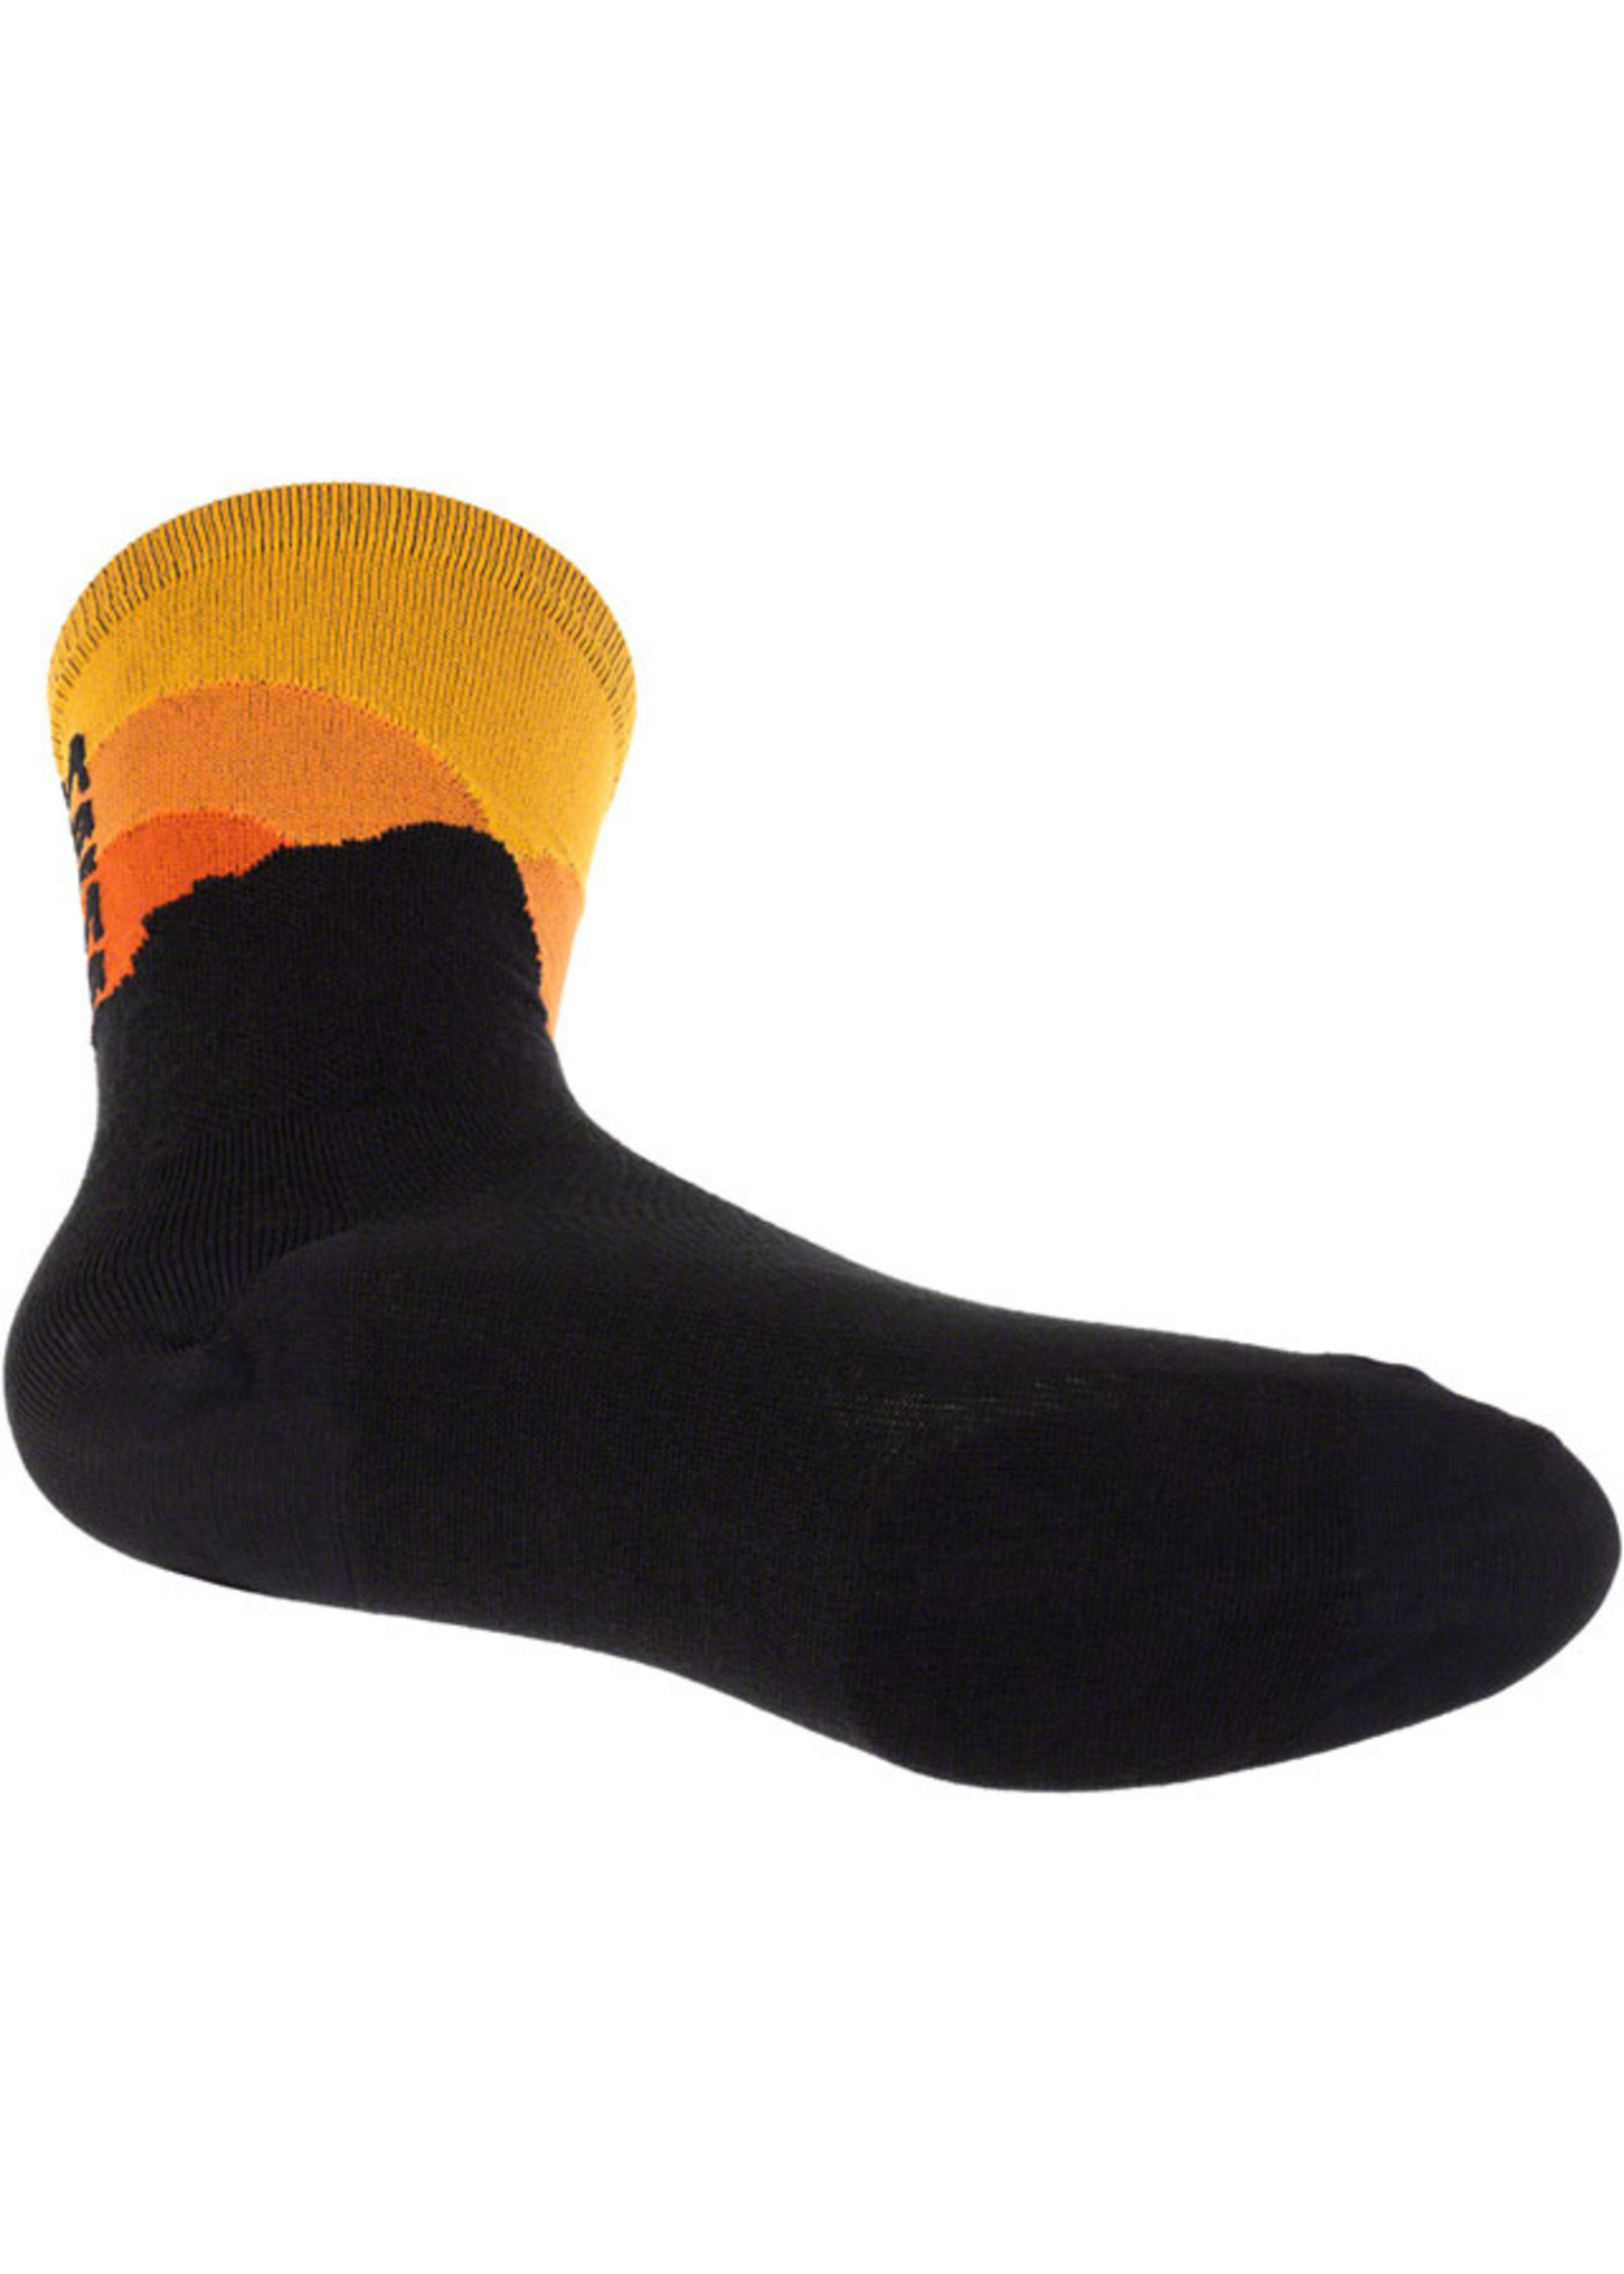 Salsa Salsa Dawn Patrol Sock - 8 inch Black Orange Large/ X-Large